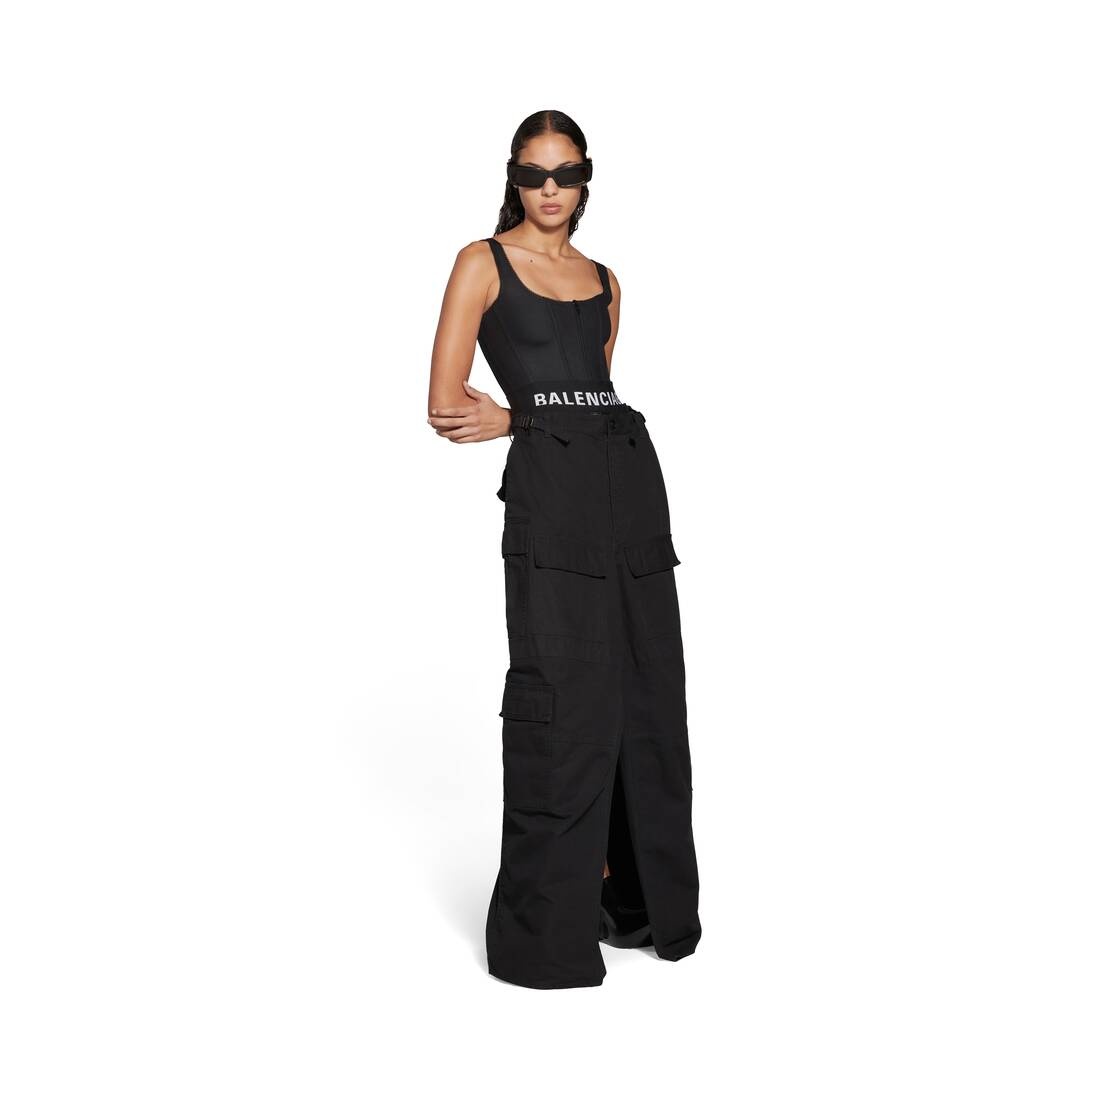 Women's Apron Cargo Pants Skirt in Black - 2